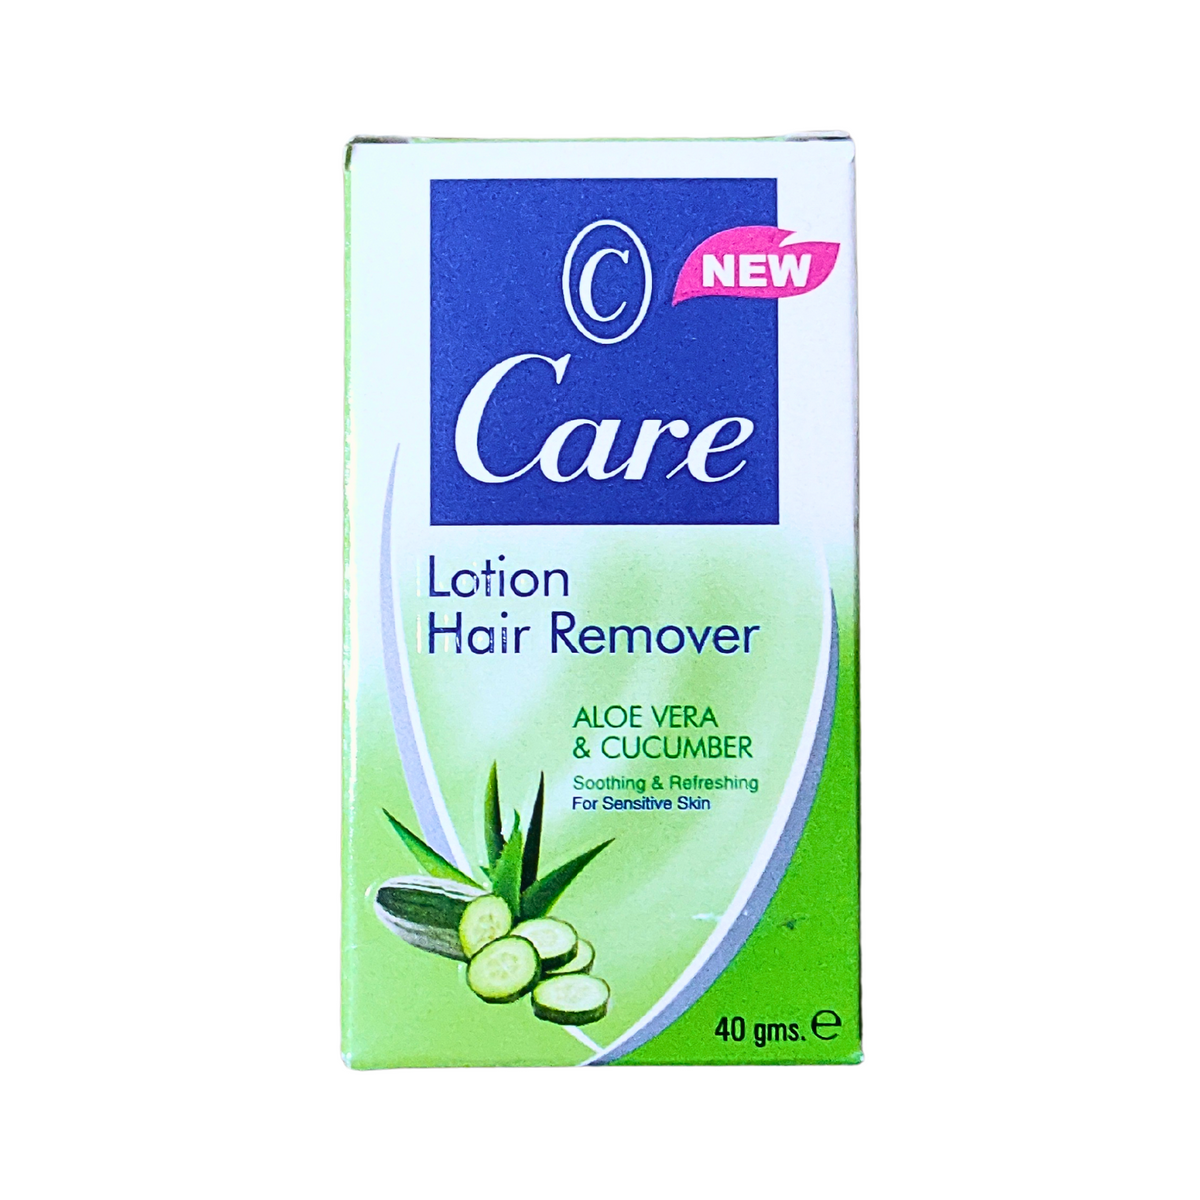 care-hair-remover-lotion-aloe-vera-cucumber-40g